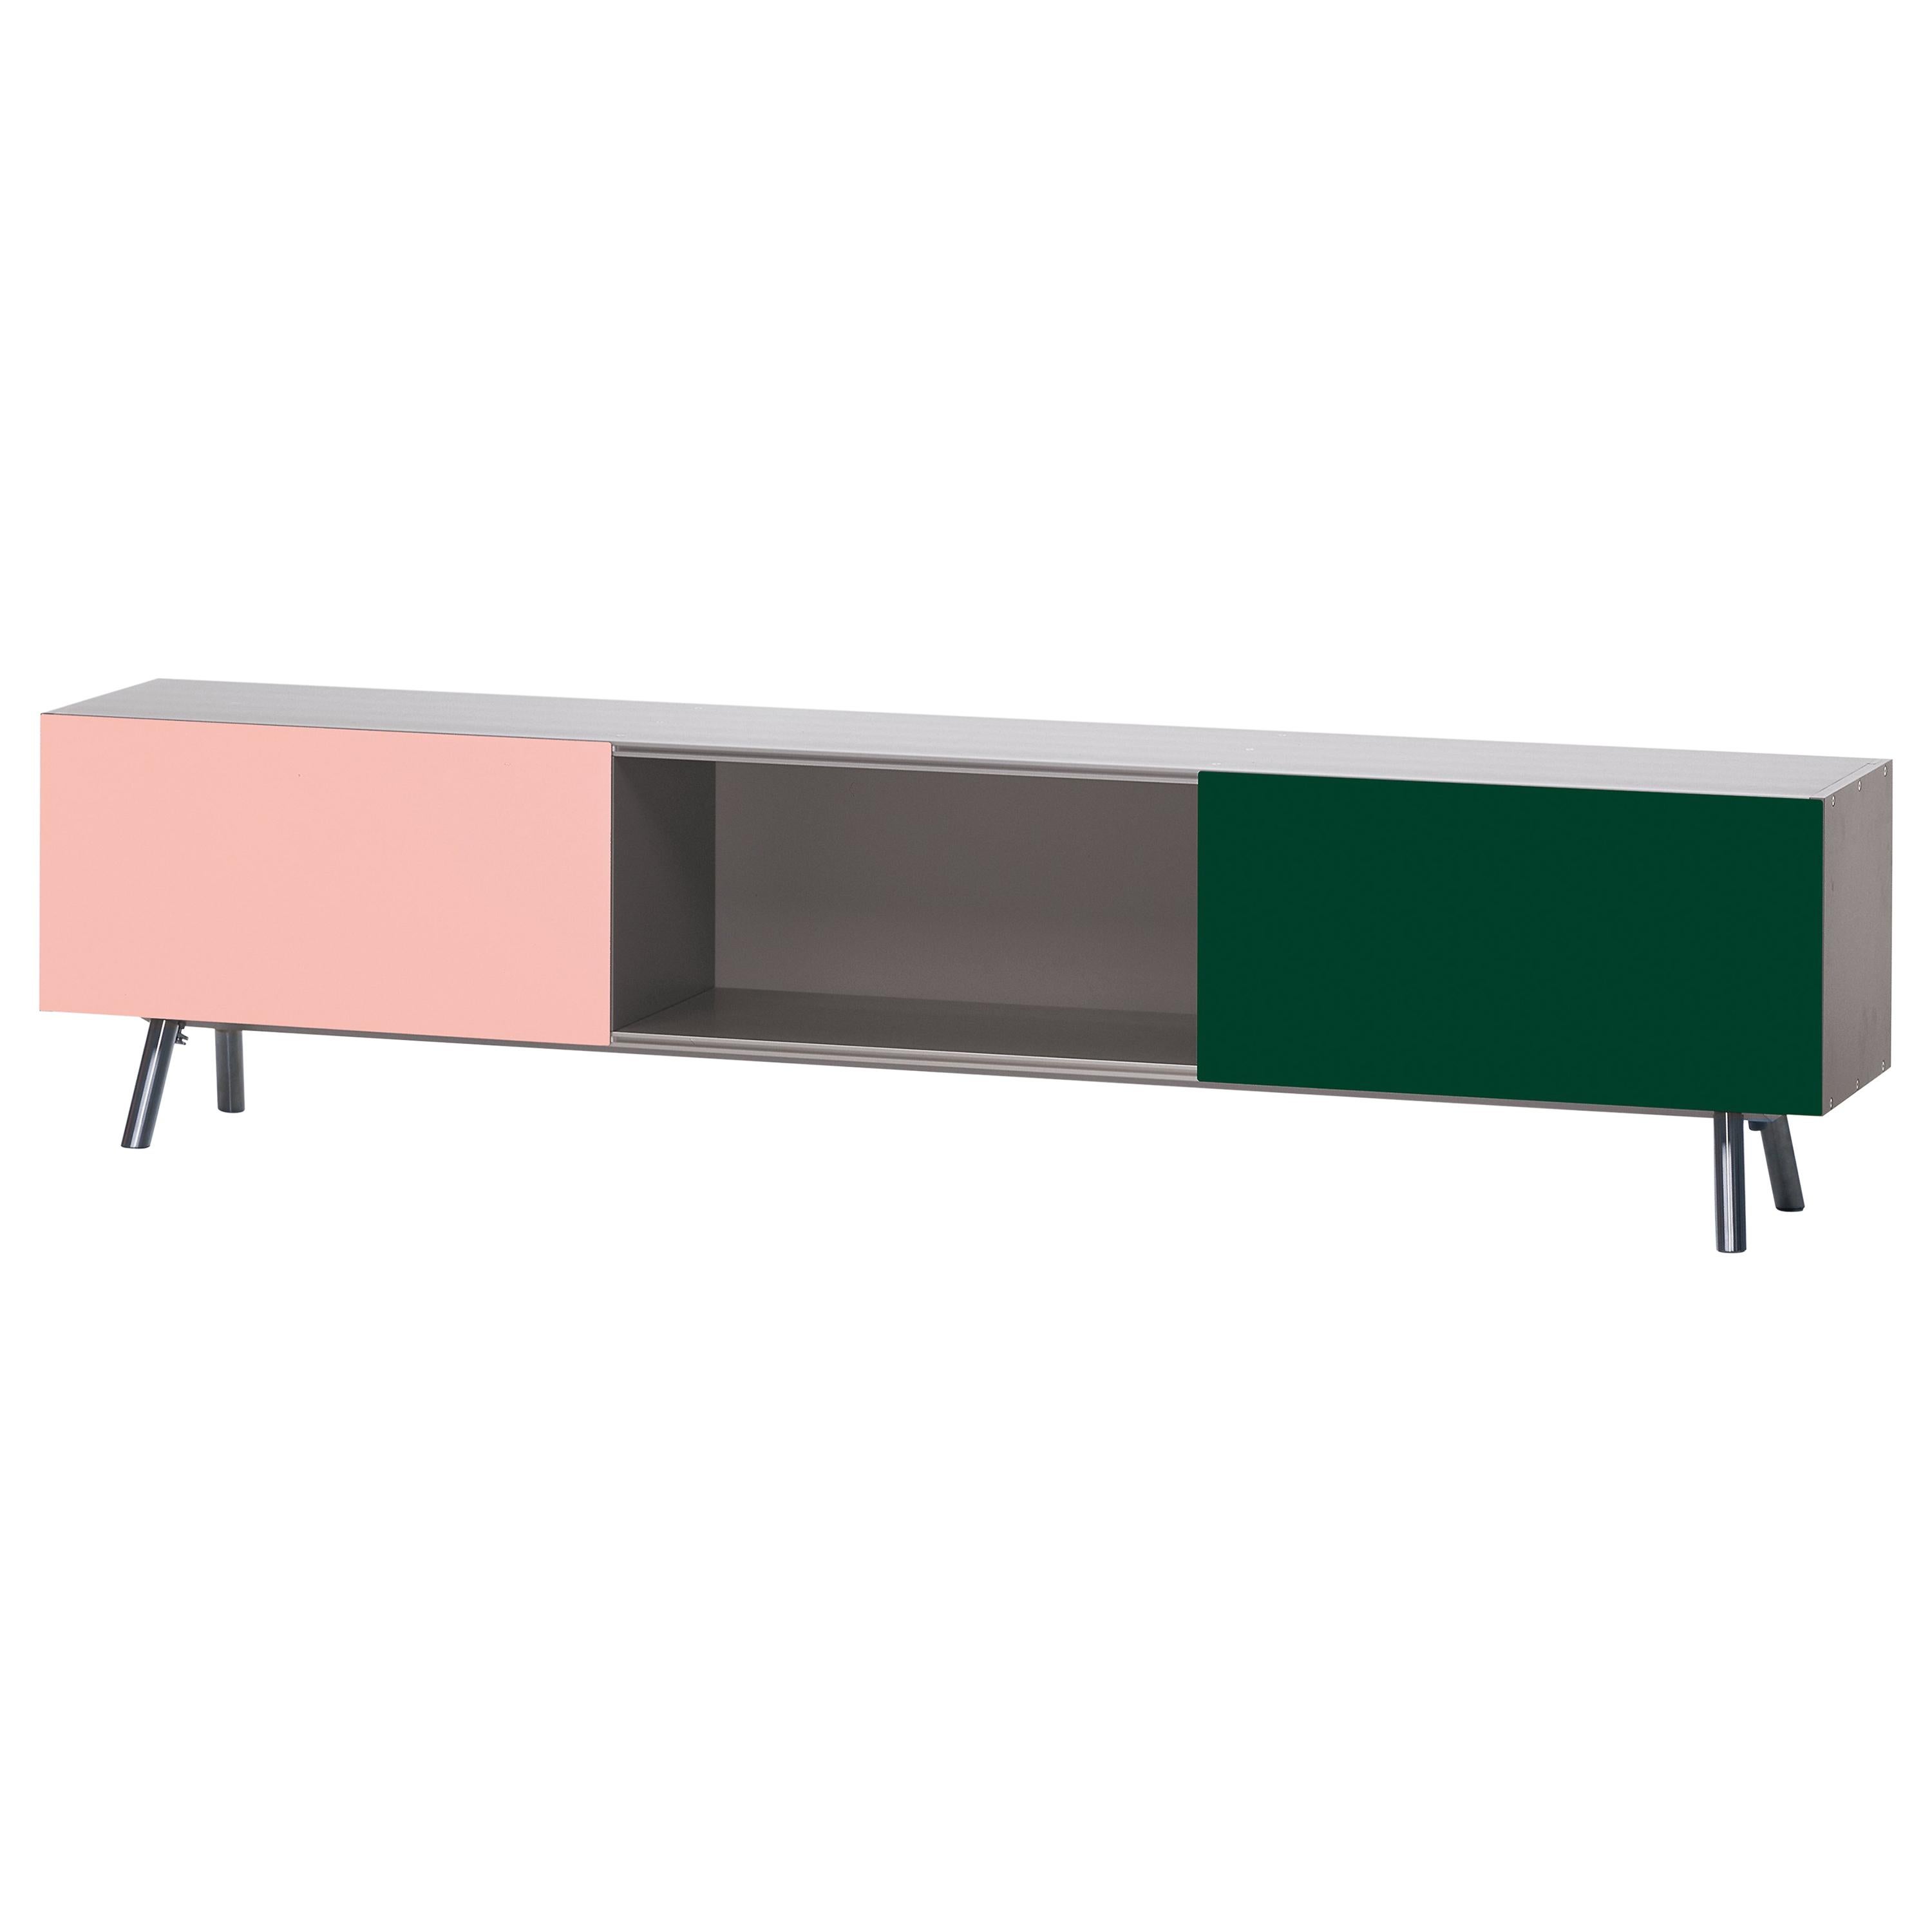 Vitra Kast 1 HU Cabinet in Pink and Dark Green by Maarten van Severen For Sale